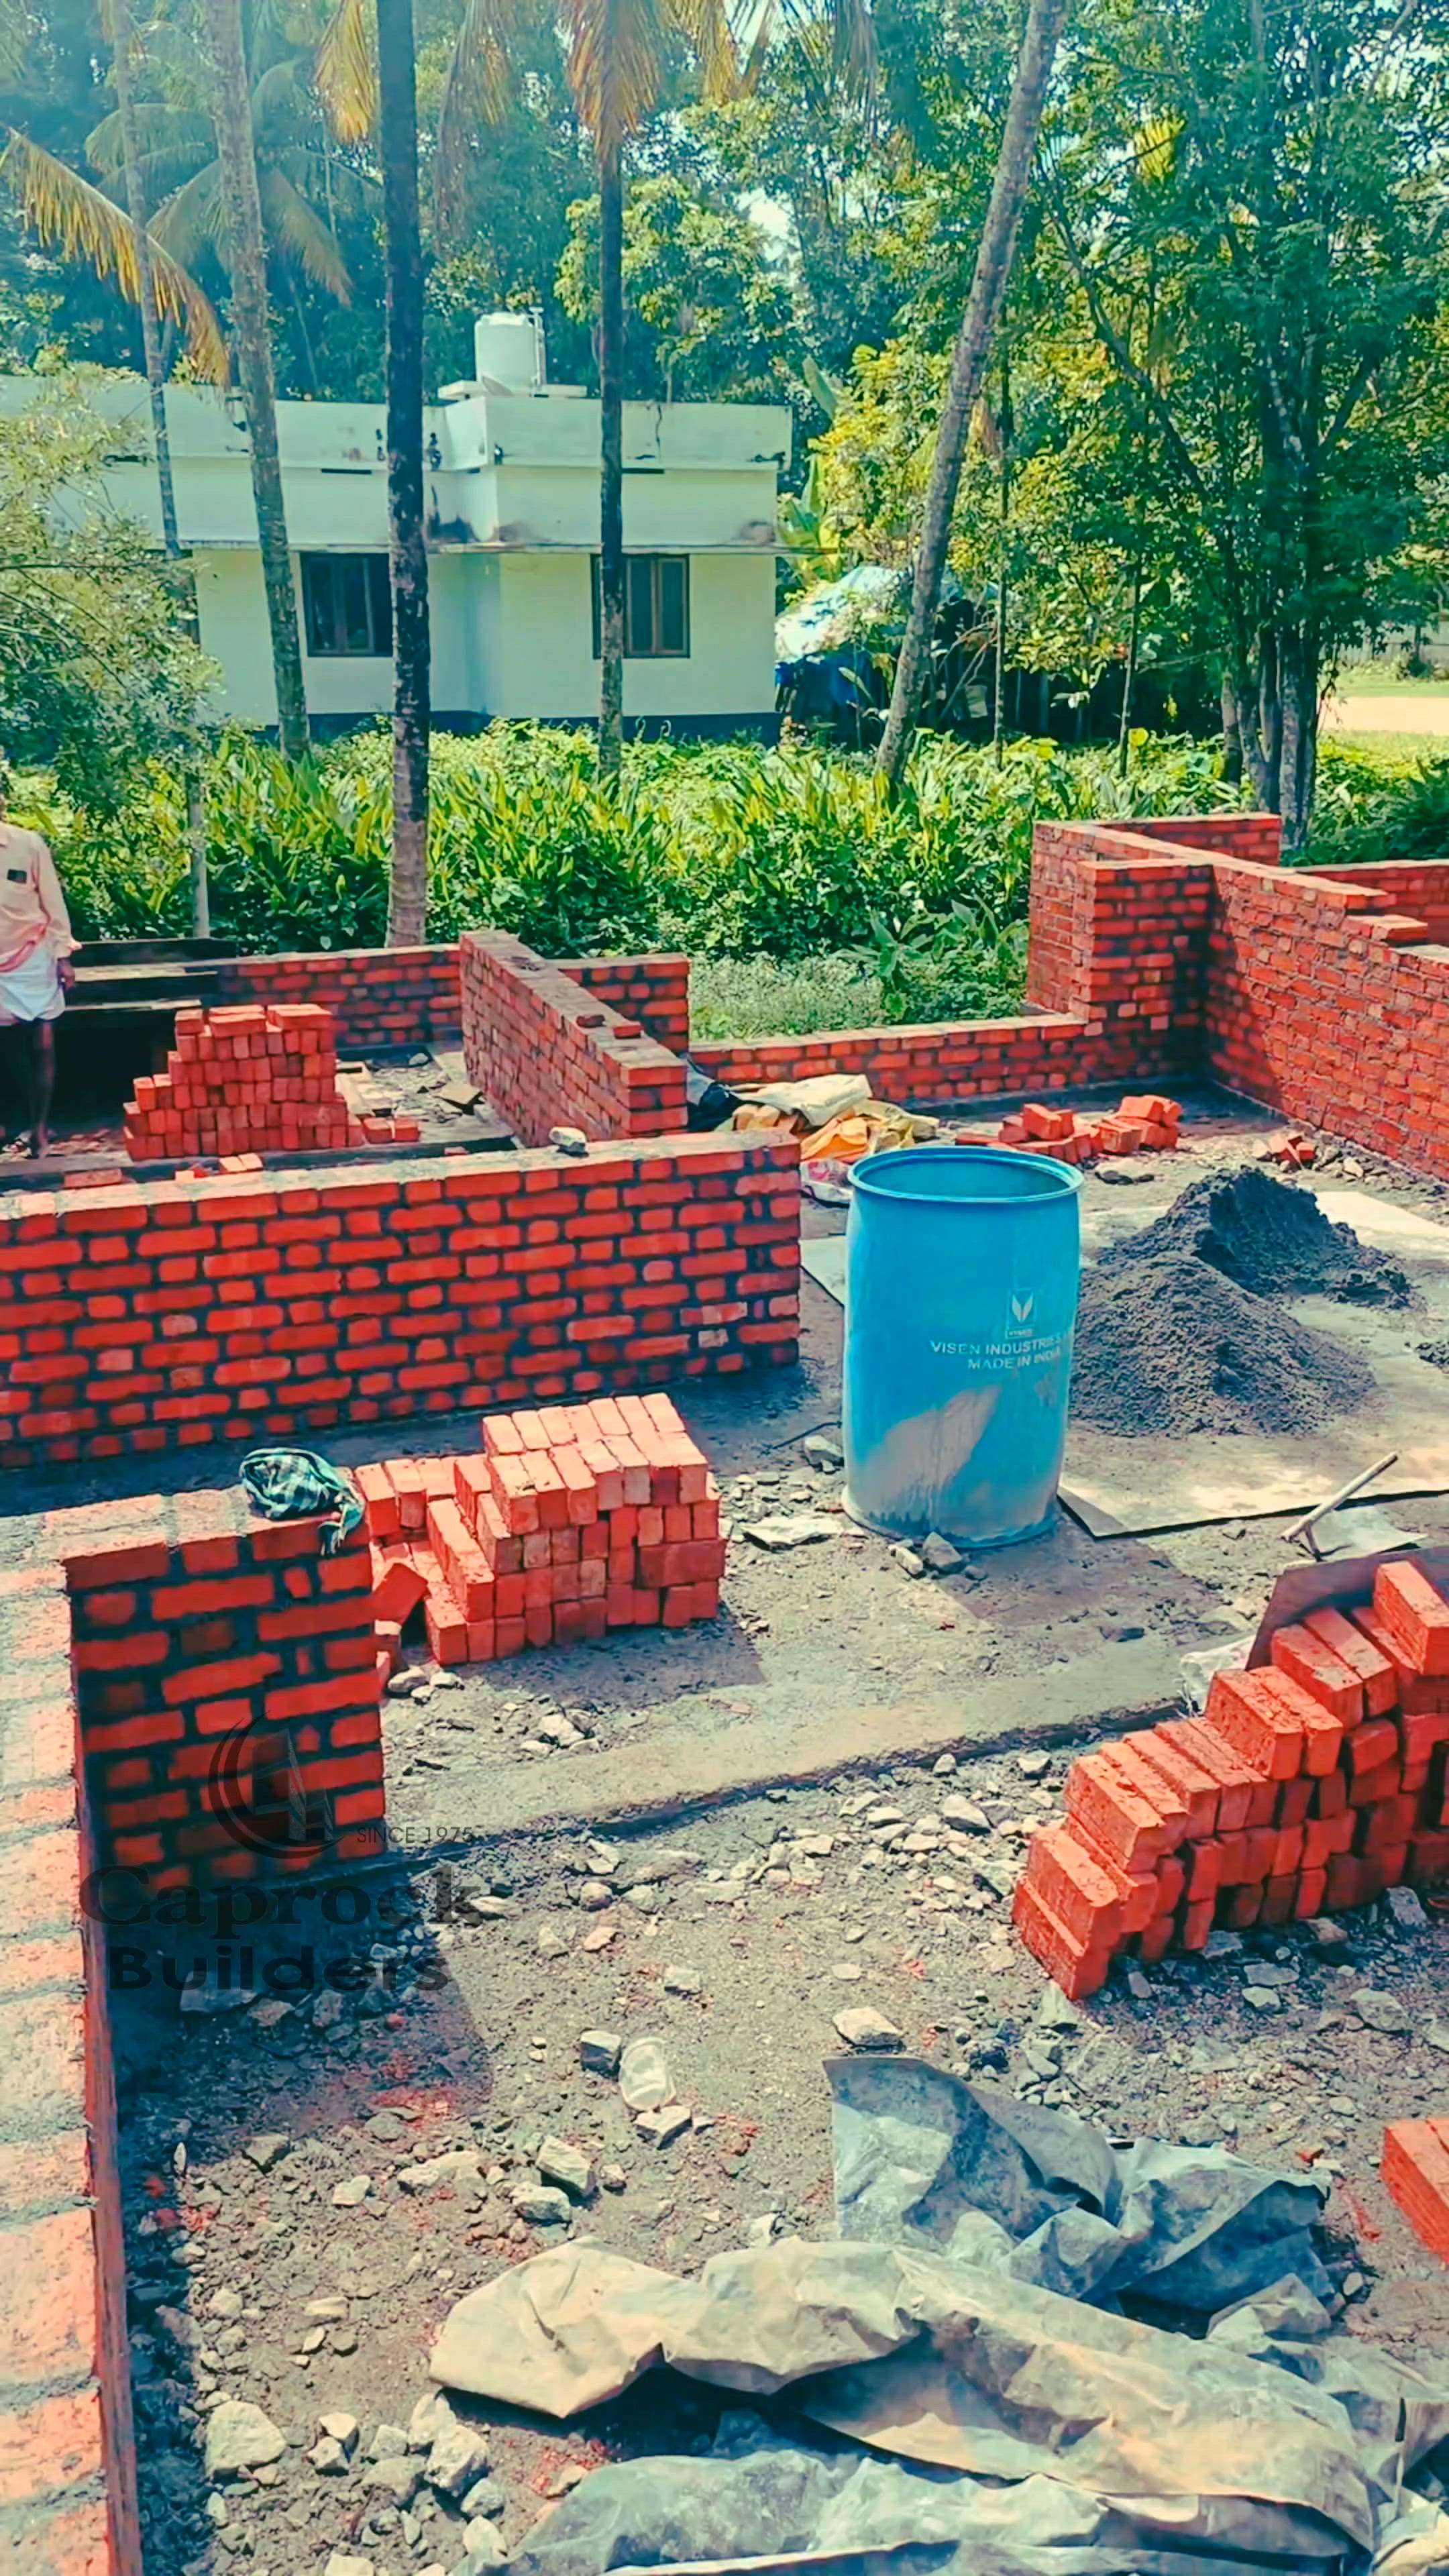 #caprock_builders #Brickwork 
Location: Kalamuri